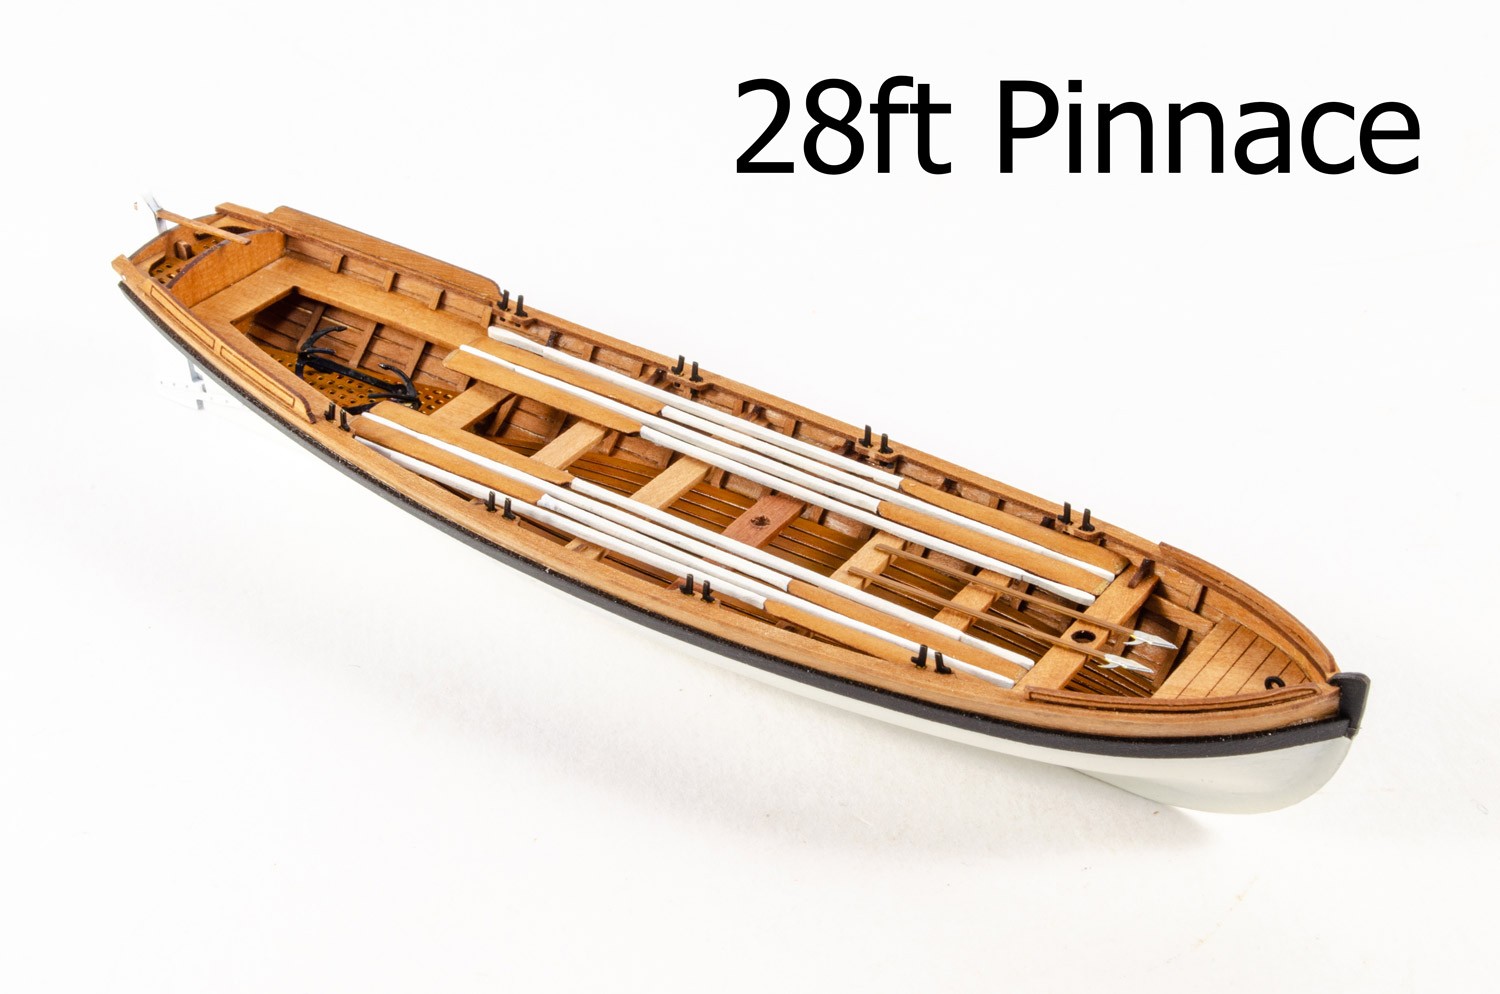 28ft Pinnace (Vanguard Models, 134mm)